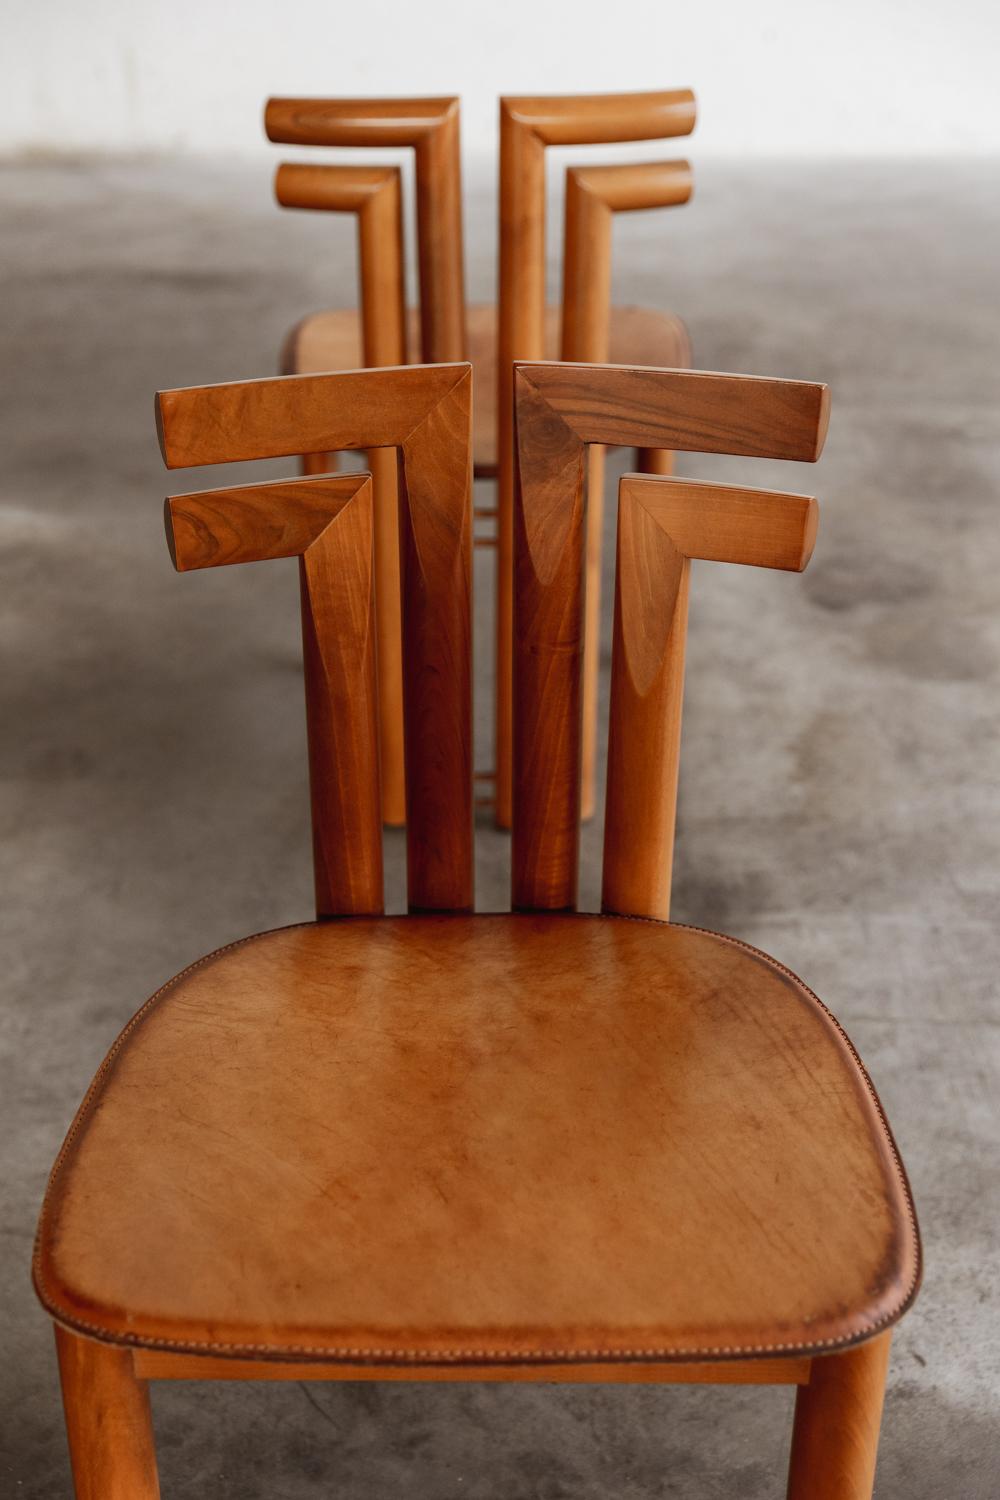 Mario Marenco “Sapporo” Dining Chairs for Mobil Girgi, 1970, set of 4 In Good Condition For Sale In Lonigo, Veneto